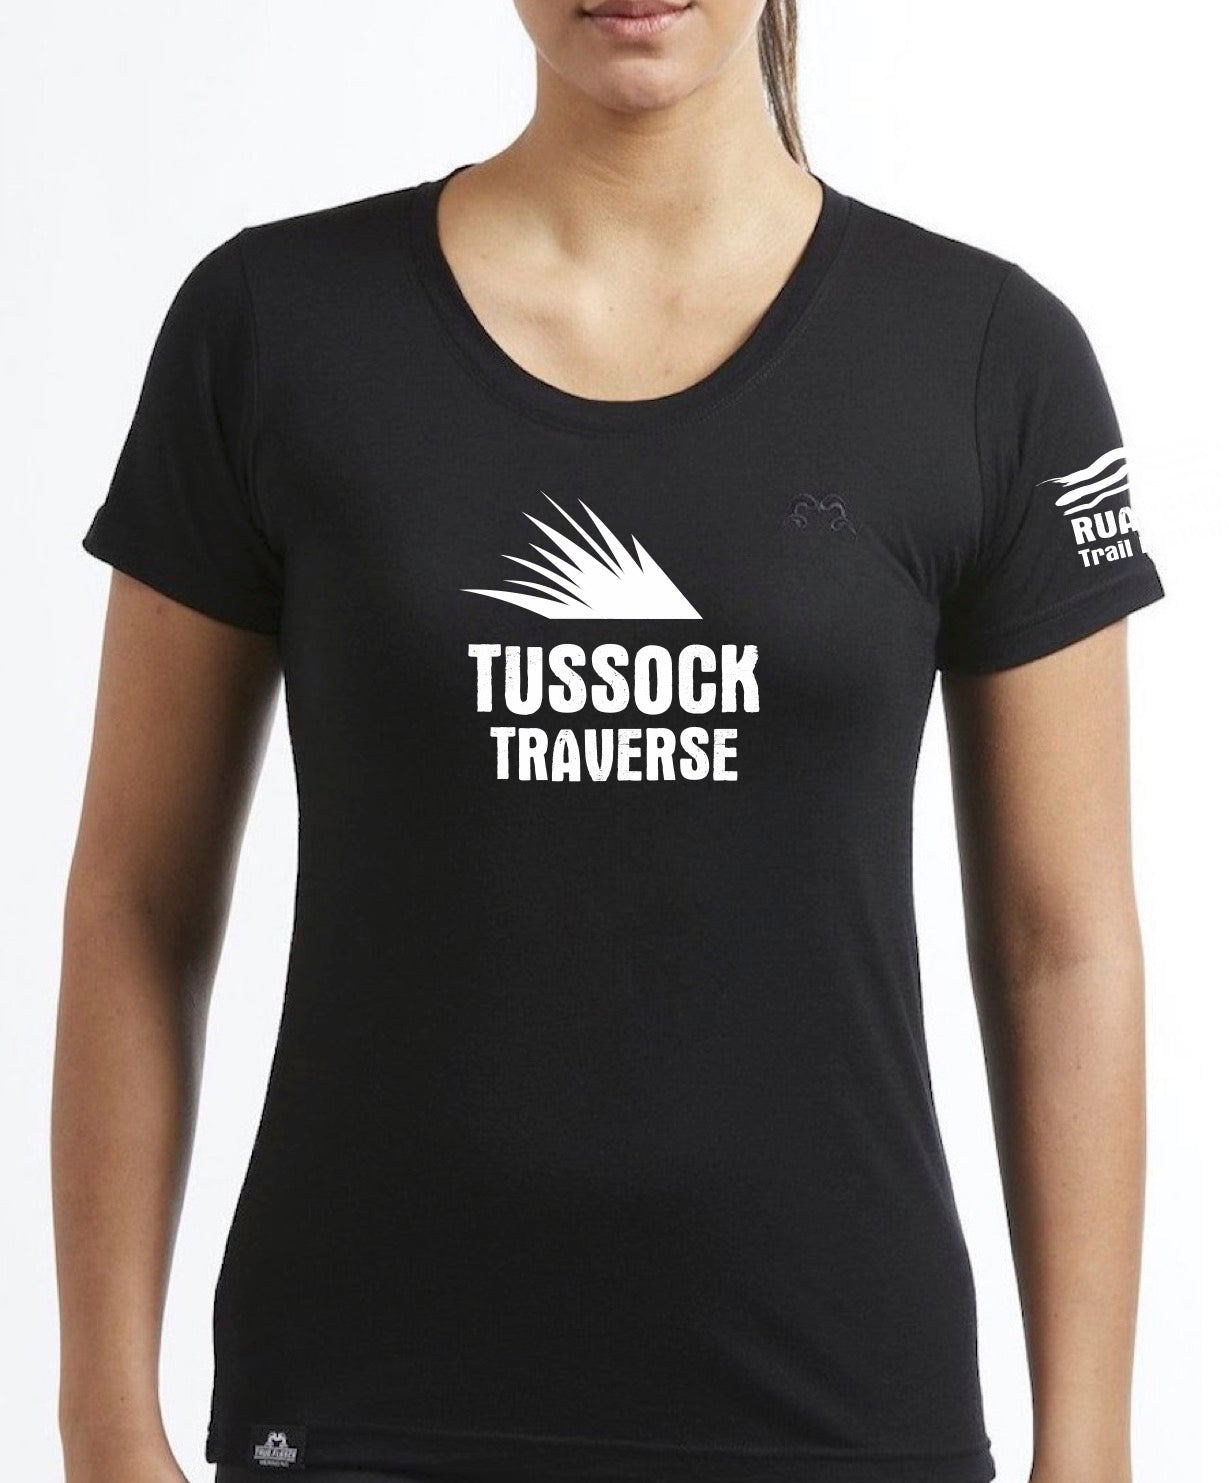 Tussock Traverse T-shirt Black - Women